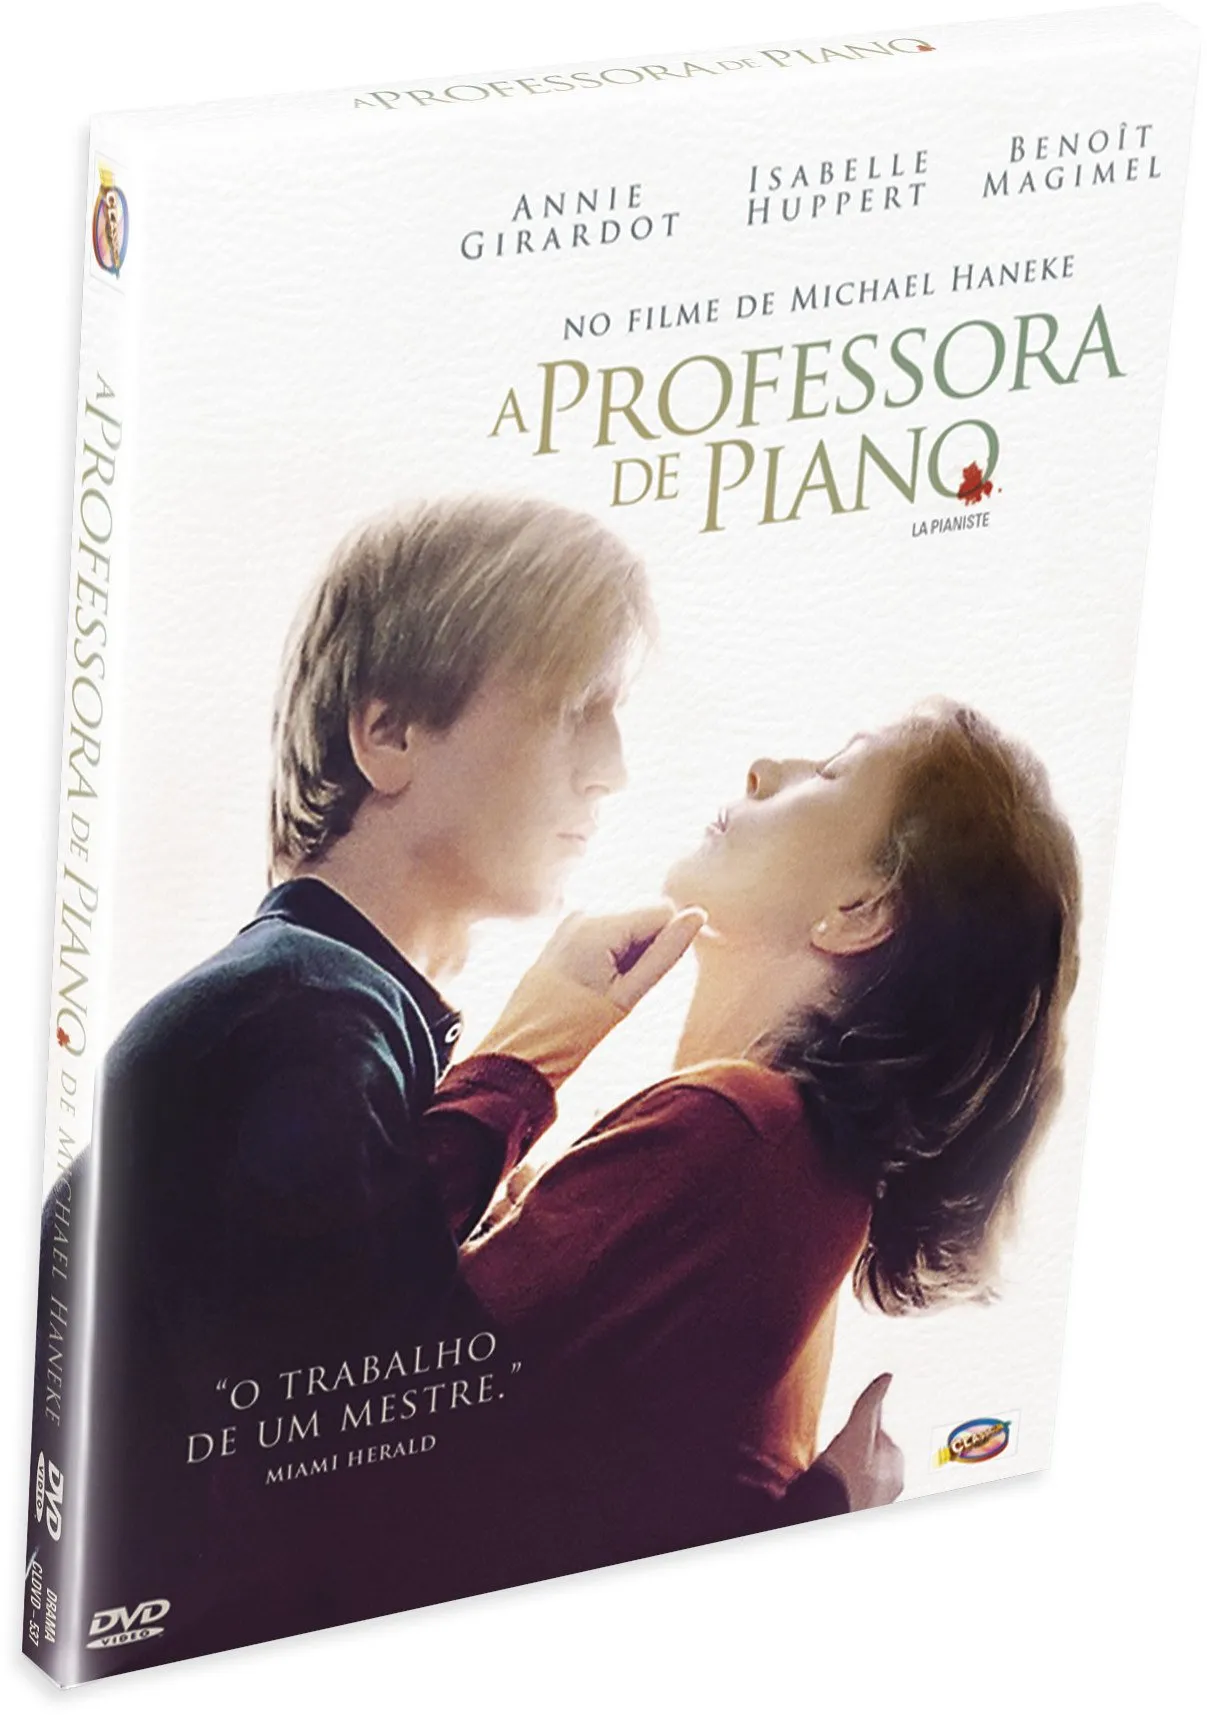 A PROFESSORA DE PIANO (Digipack)